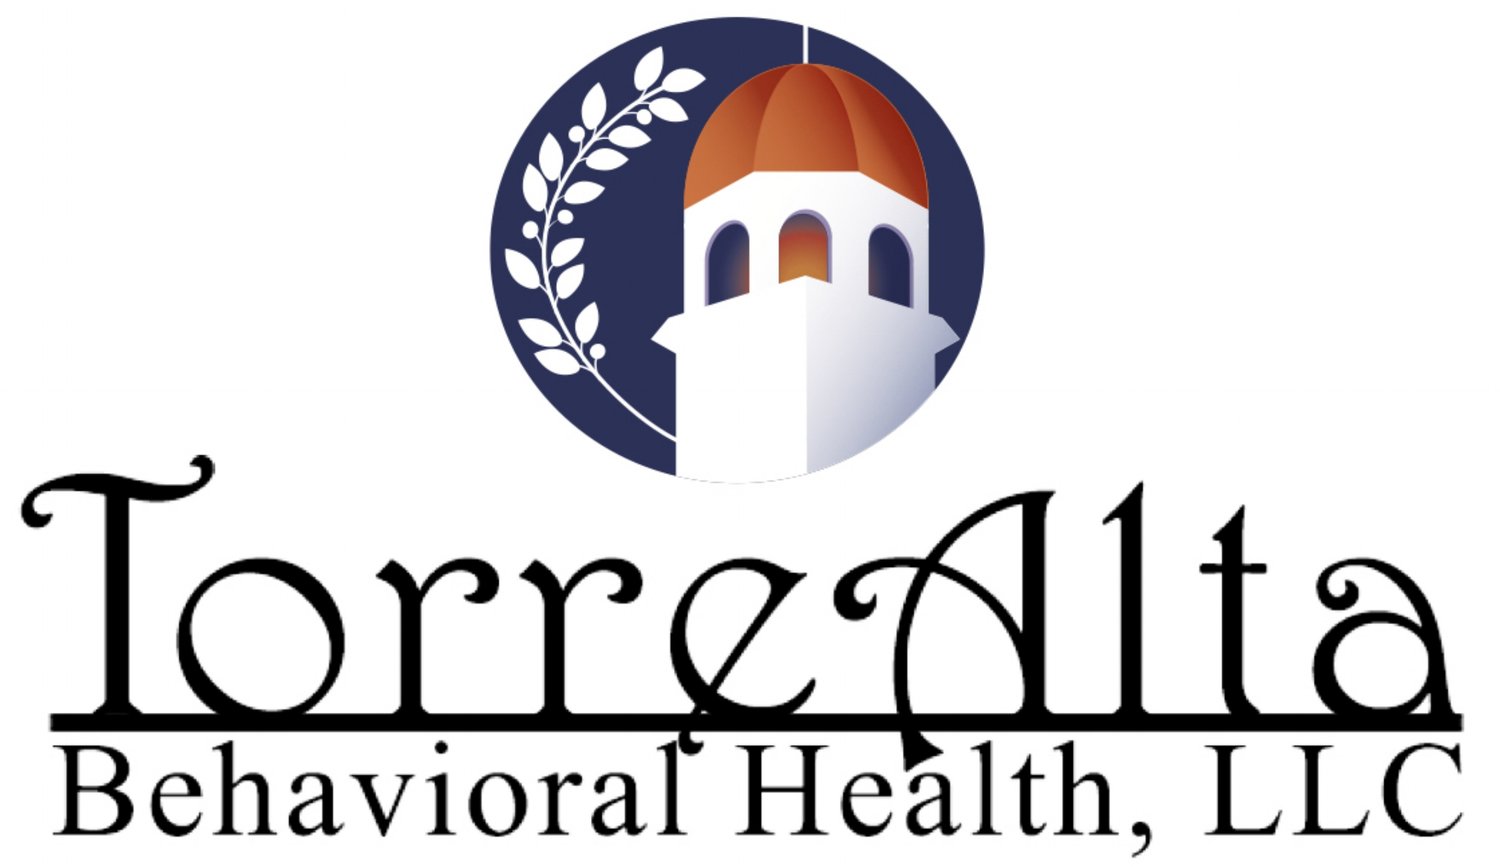 TorreAlta Behavioral Health, LLC